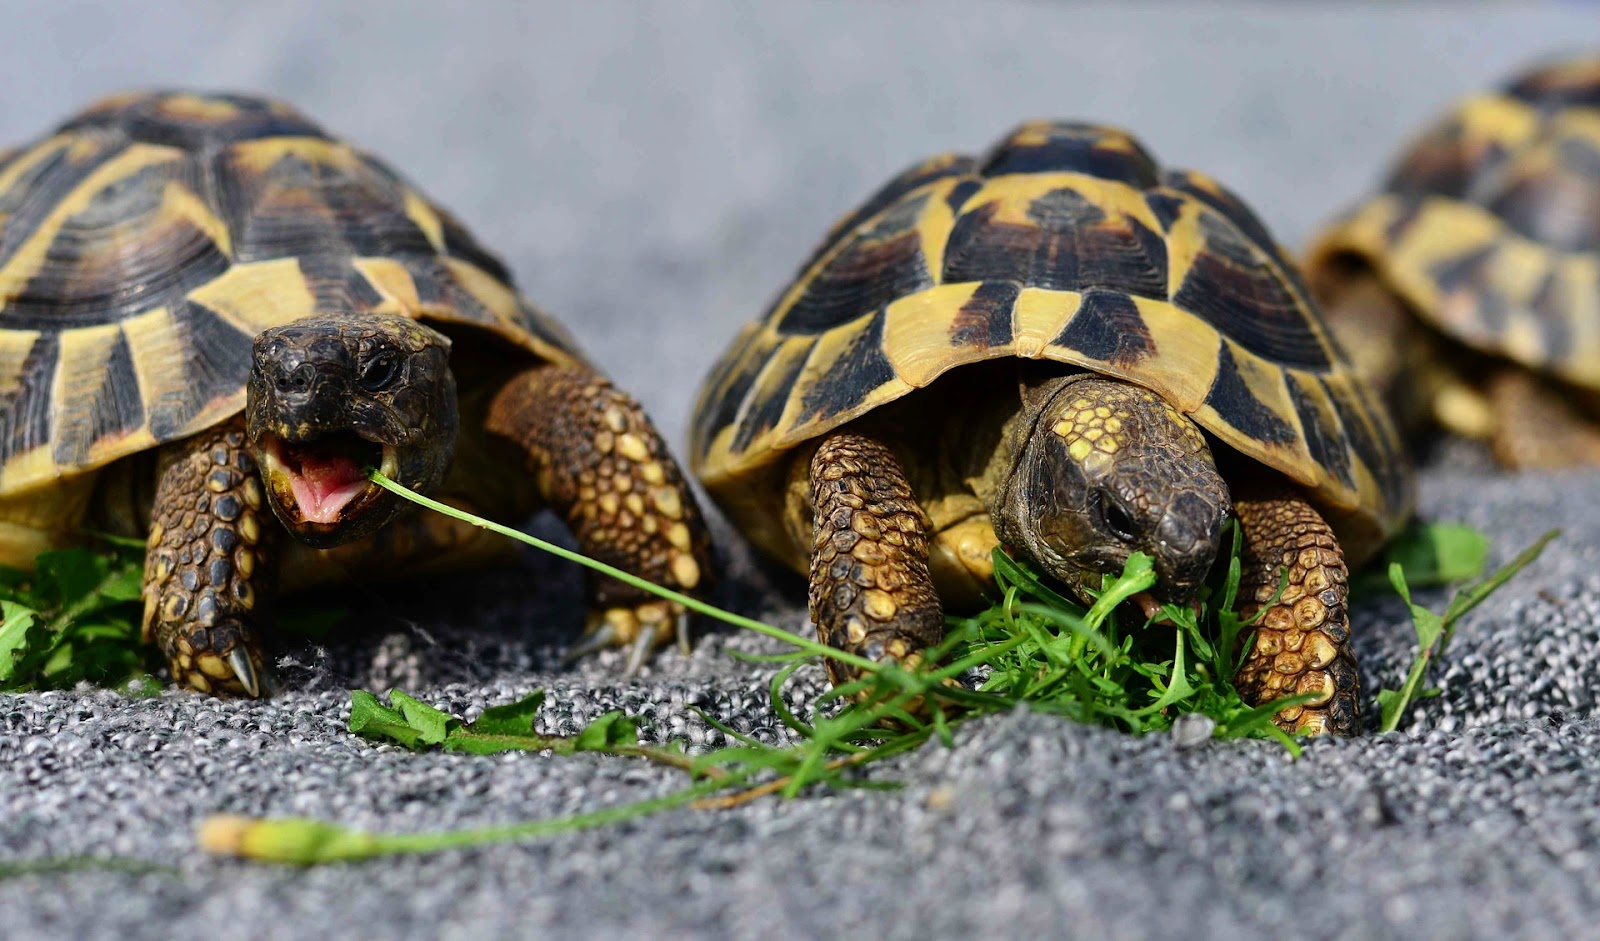 Tortoises eating greens